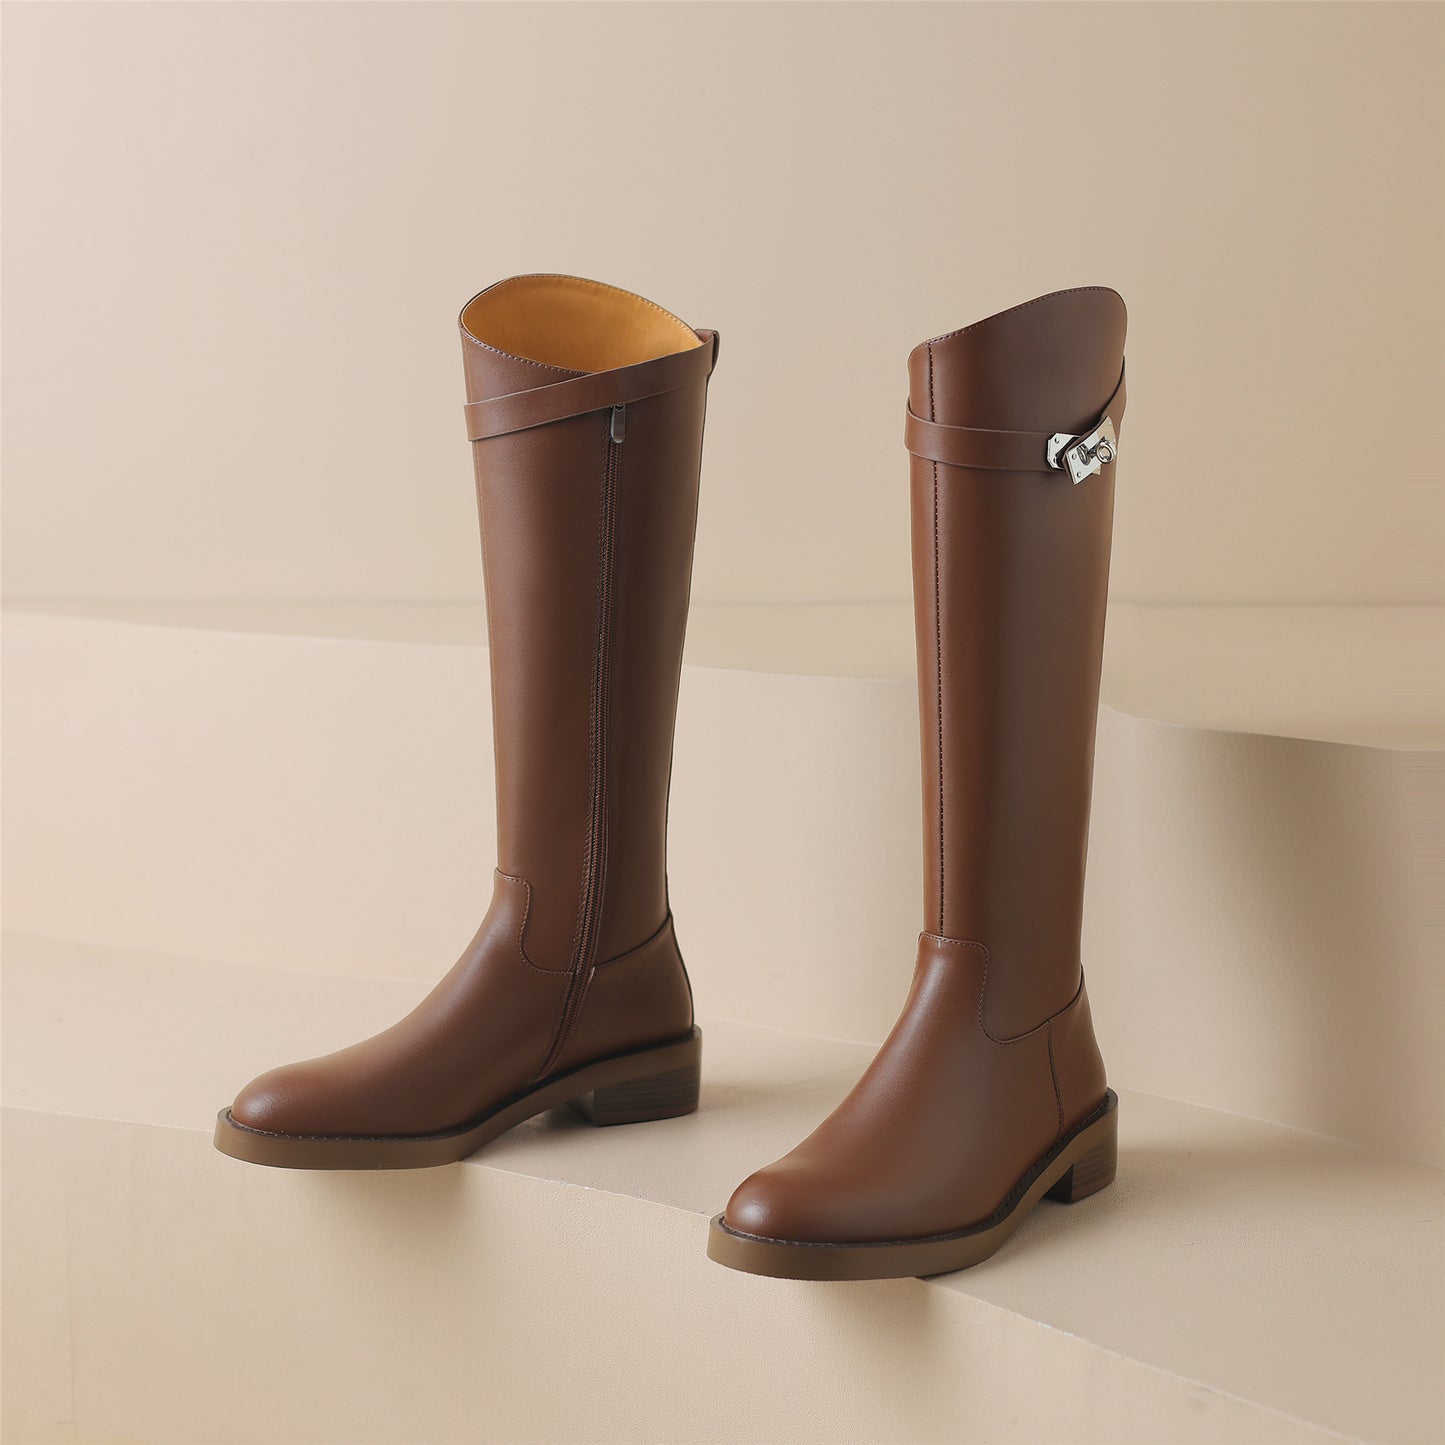 TinaCus Women's Round Toe Genuine Leather Handmade Chunky Heel Modern Buckle Side Zip Knee High Boots